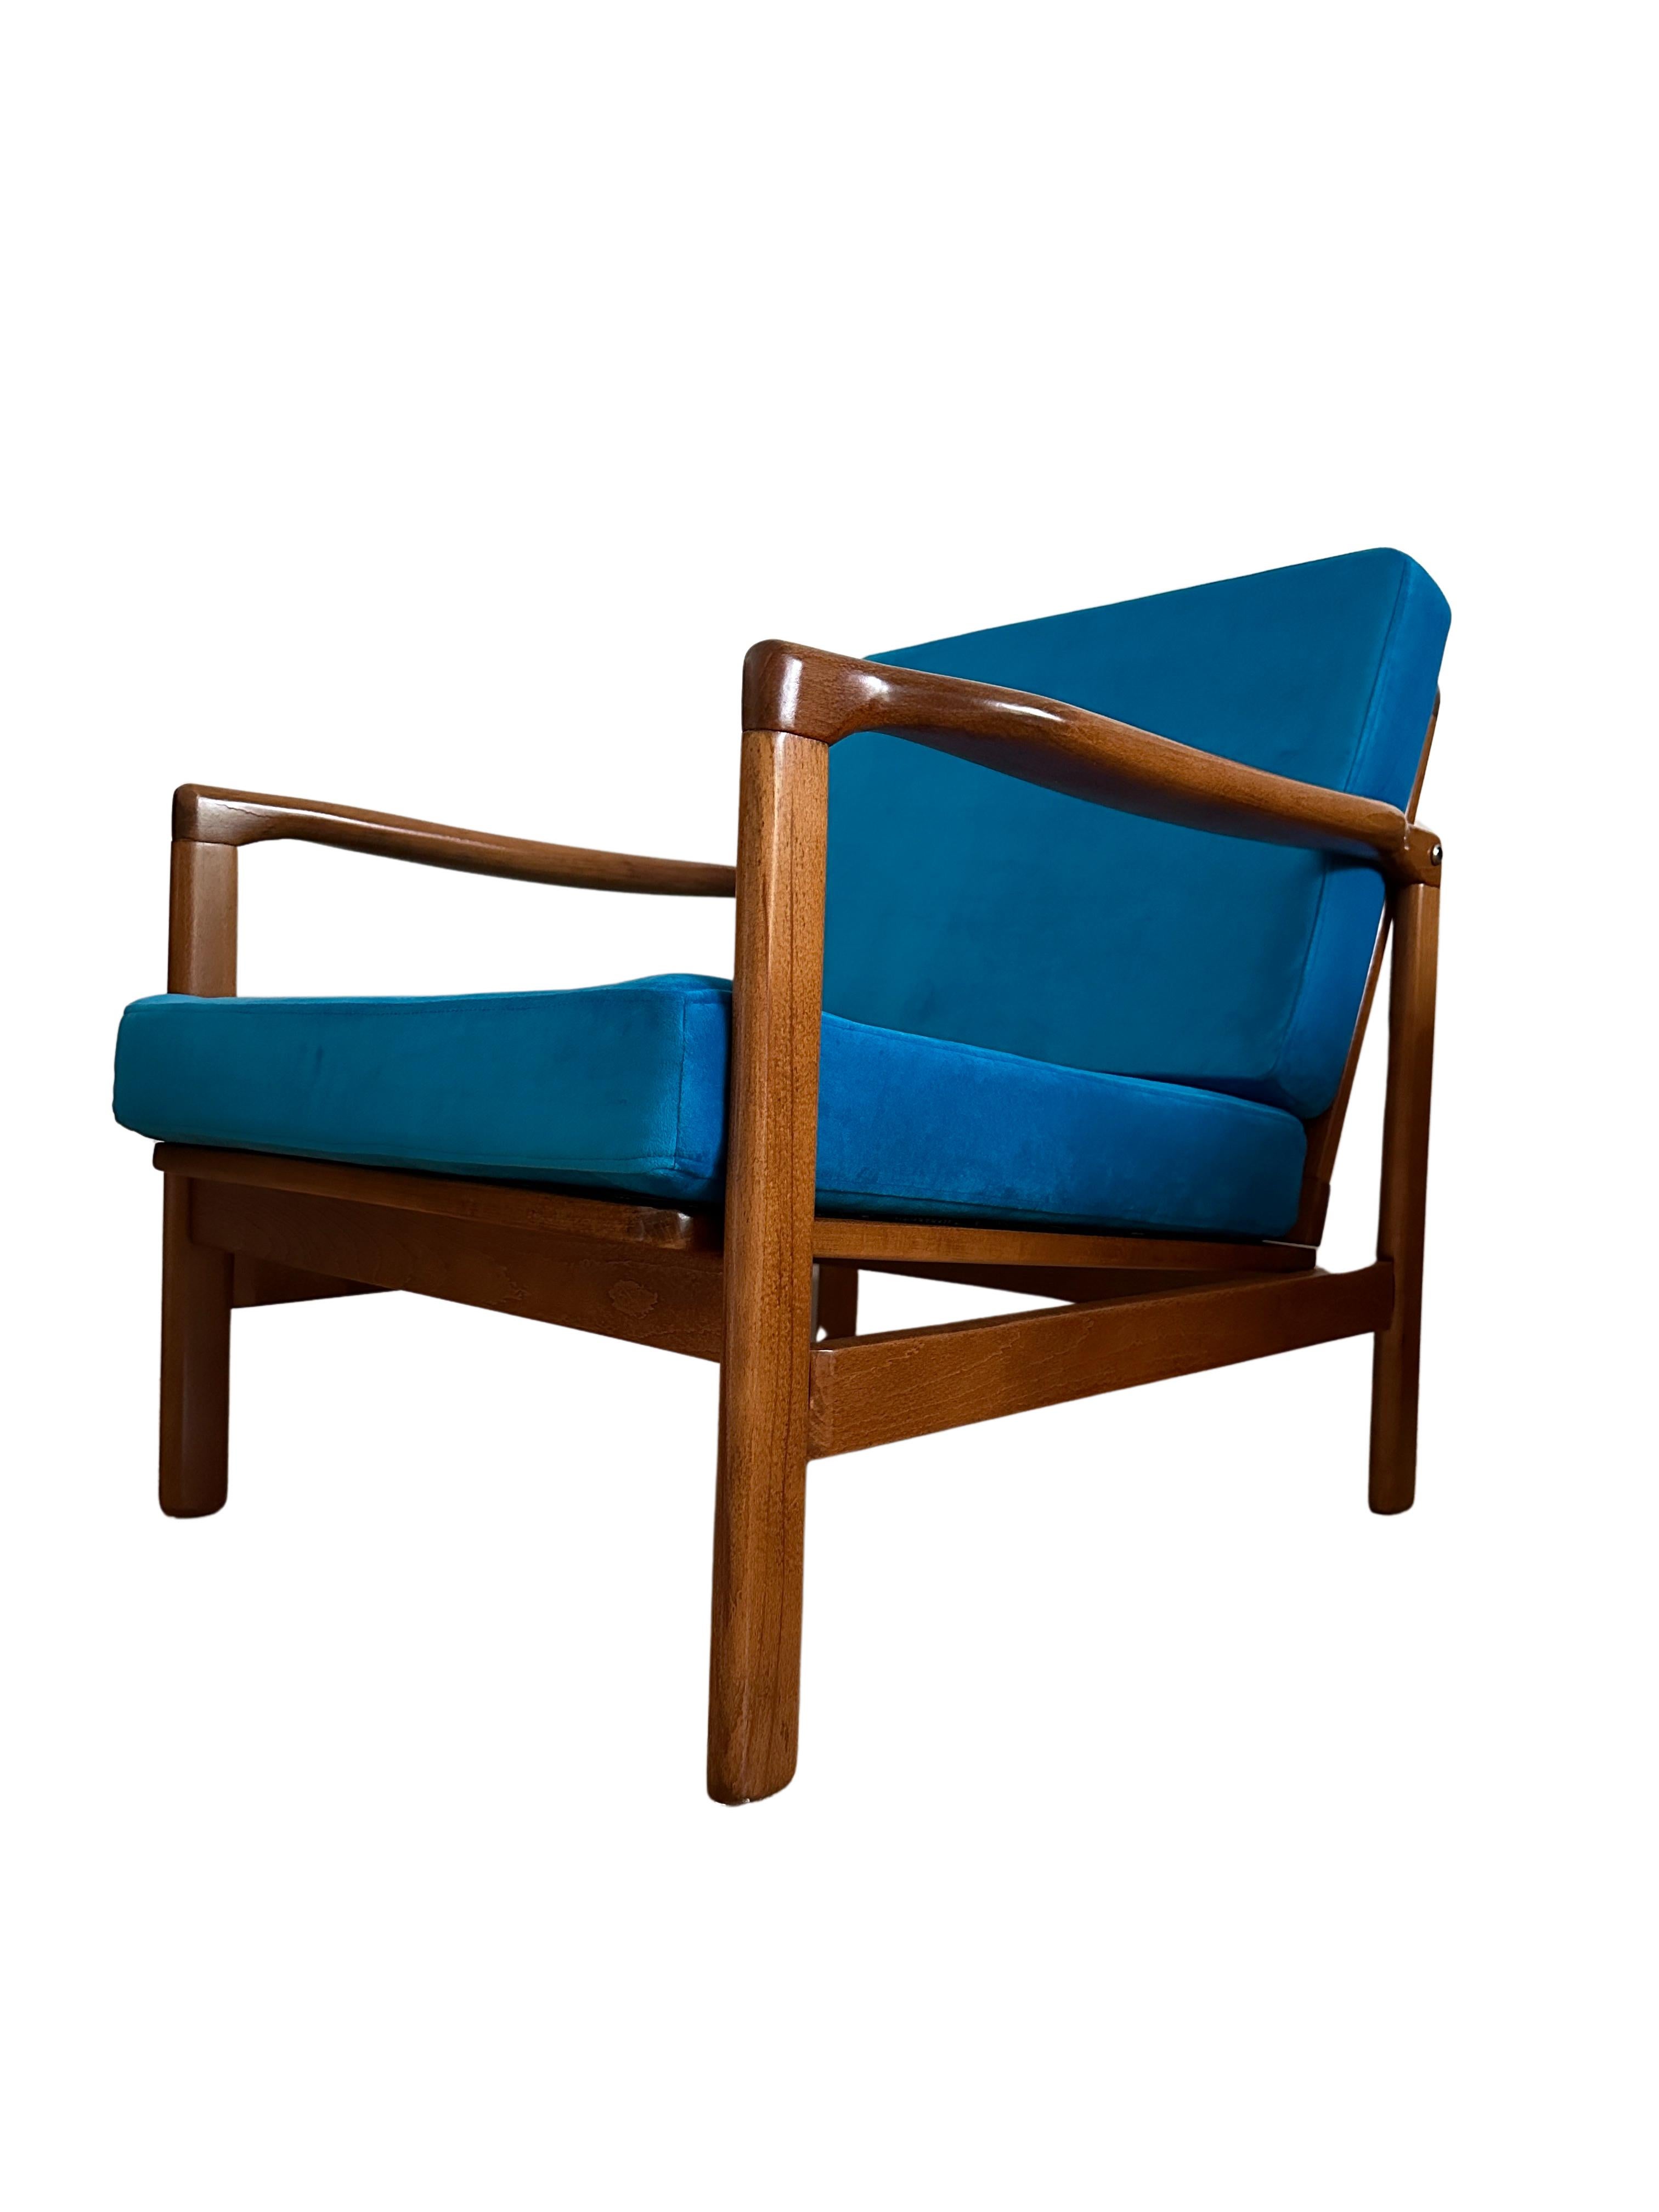 Polish Midcentury Armchair by Zenon Baczyk, Blue Velvet Upholstery, Poland, 1960s For Sale